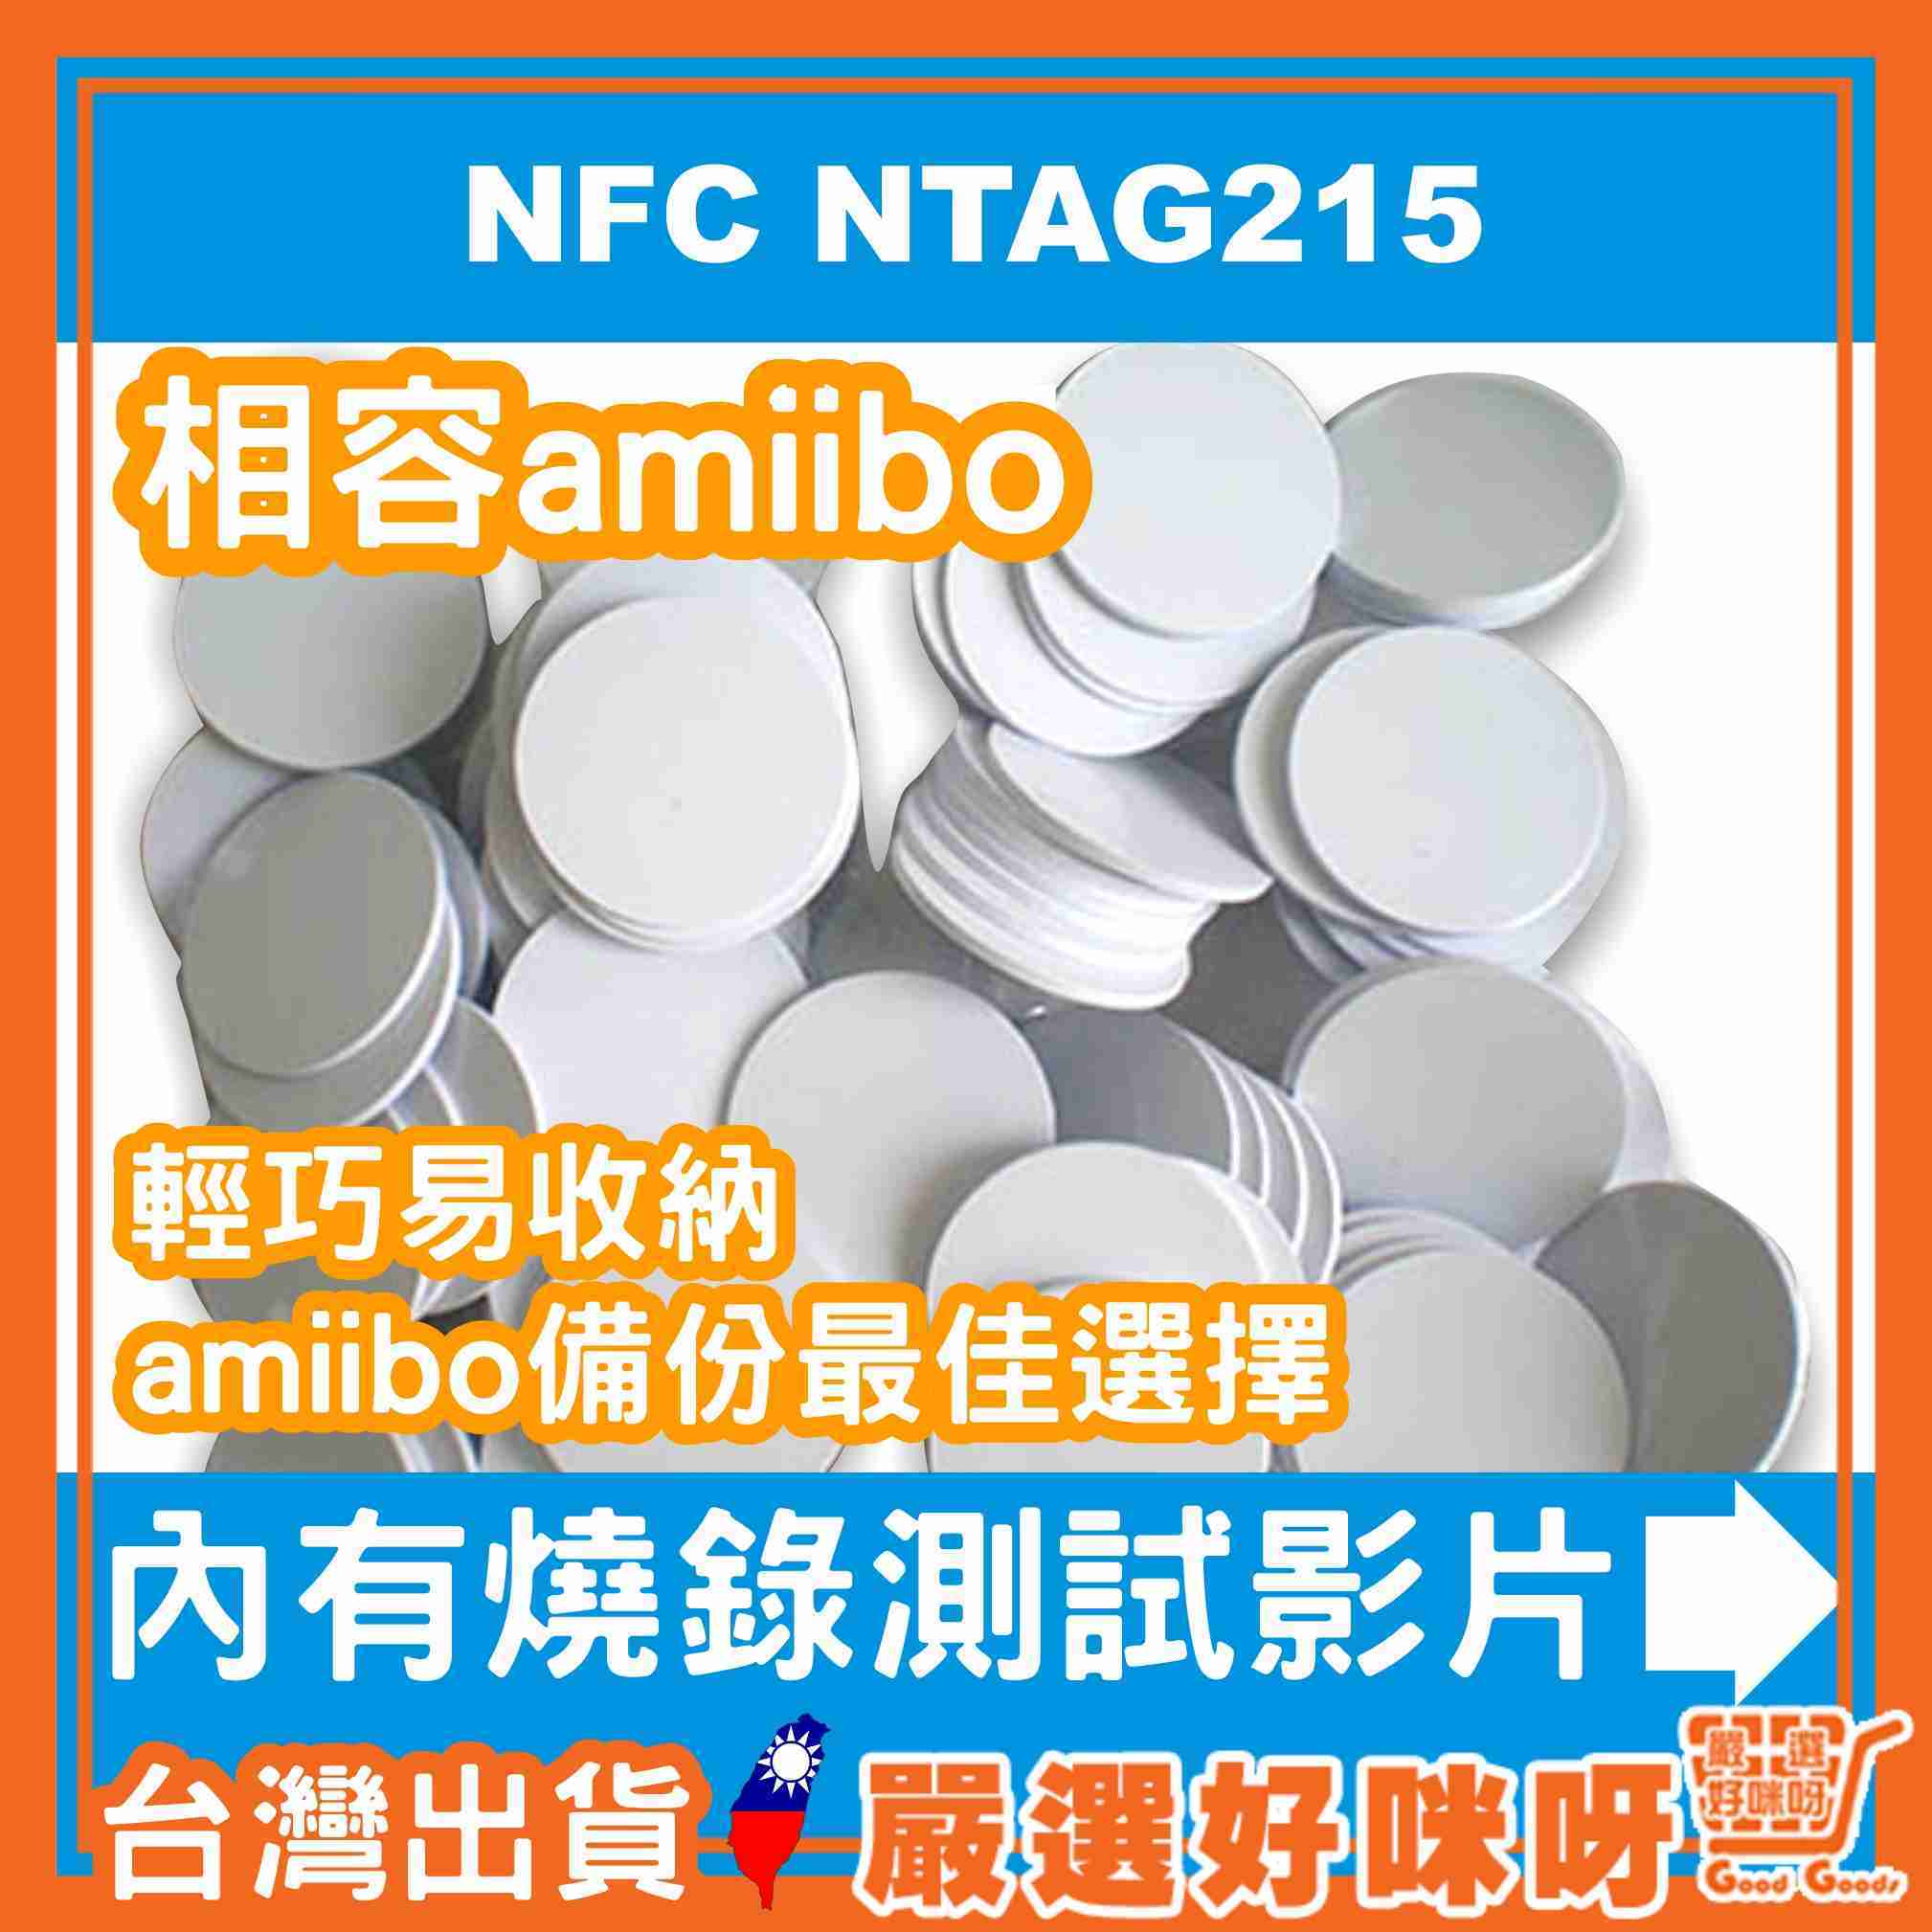 【NFC NTAG215 相容 動物森友會 amiibo 備份 自製卡】 RFID 圓型卡 13.56MHz 25mm